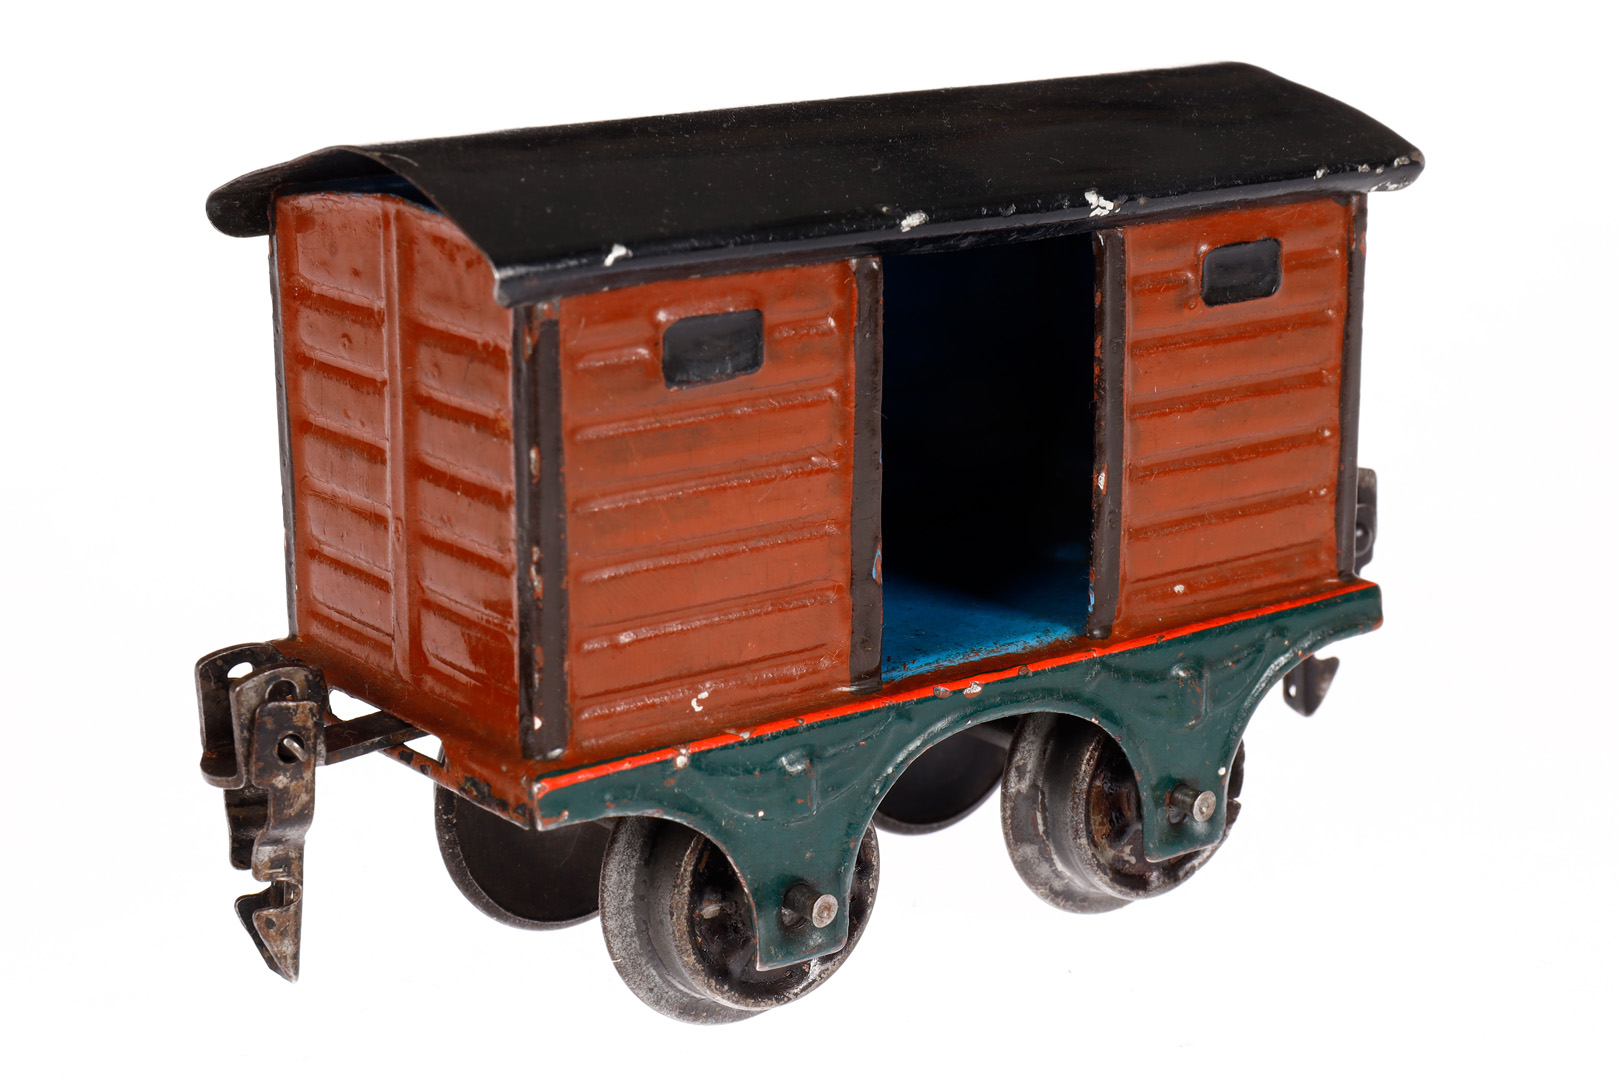 Märklin ged. Güterwagen 1803, Spur 0, uralt, HL, mit 1 TÖ, LS und gealterter Lack, L 9,5, sonst noch - Image 2 of 4